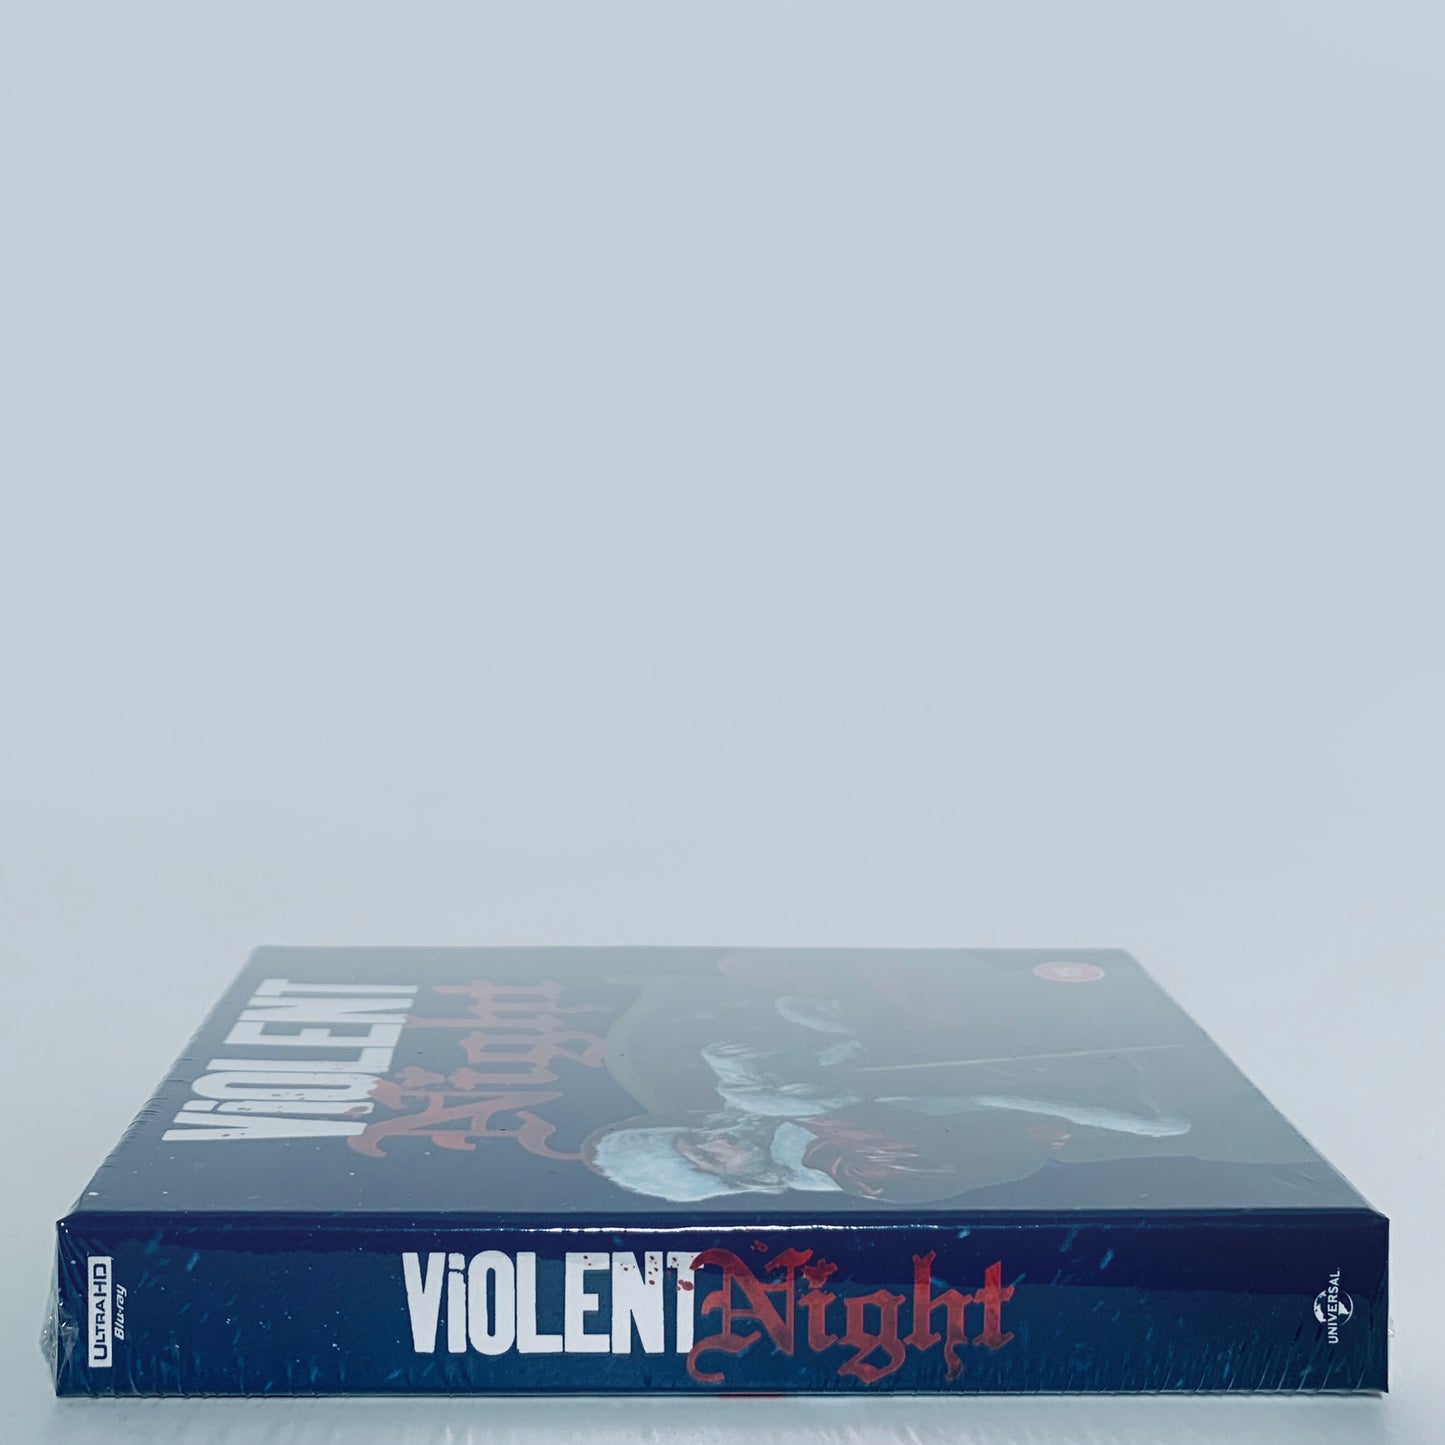 Violent Night David Harbour UHD 4K Limited Edition SteelBook Ultra HD Blu-ray